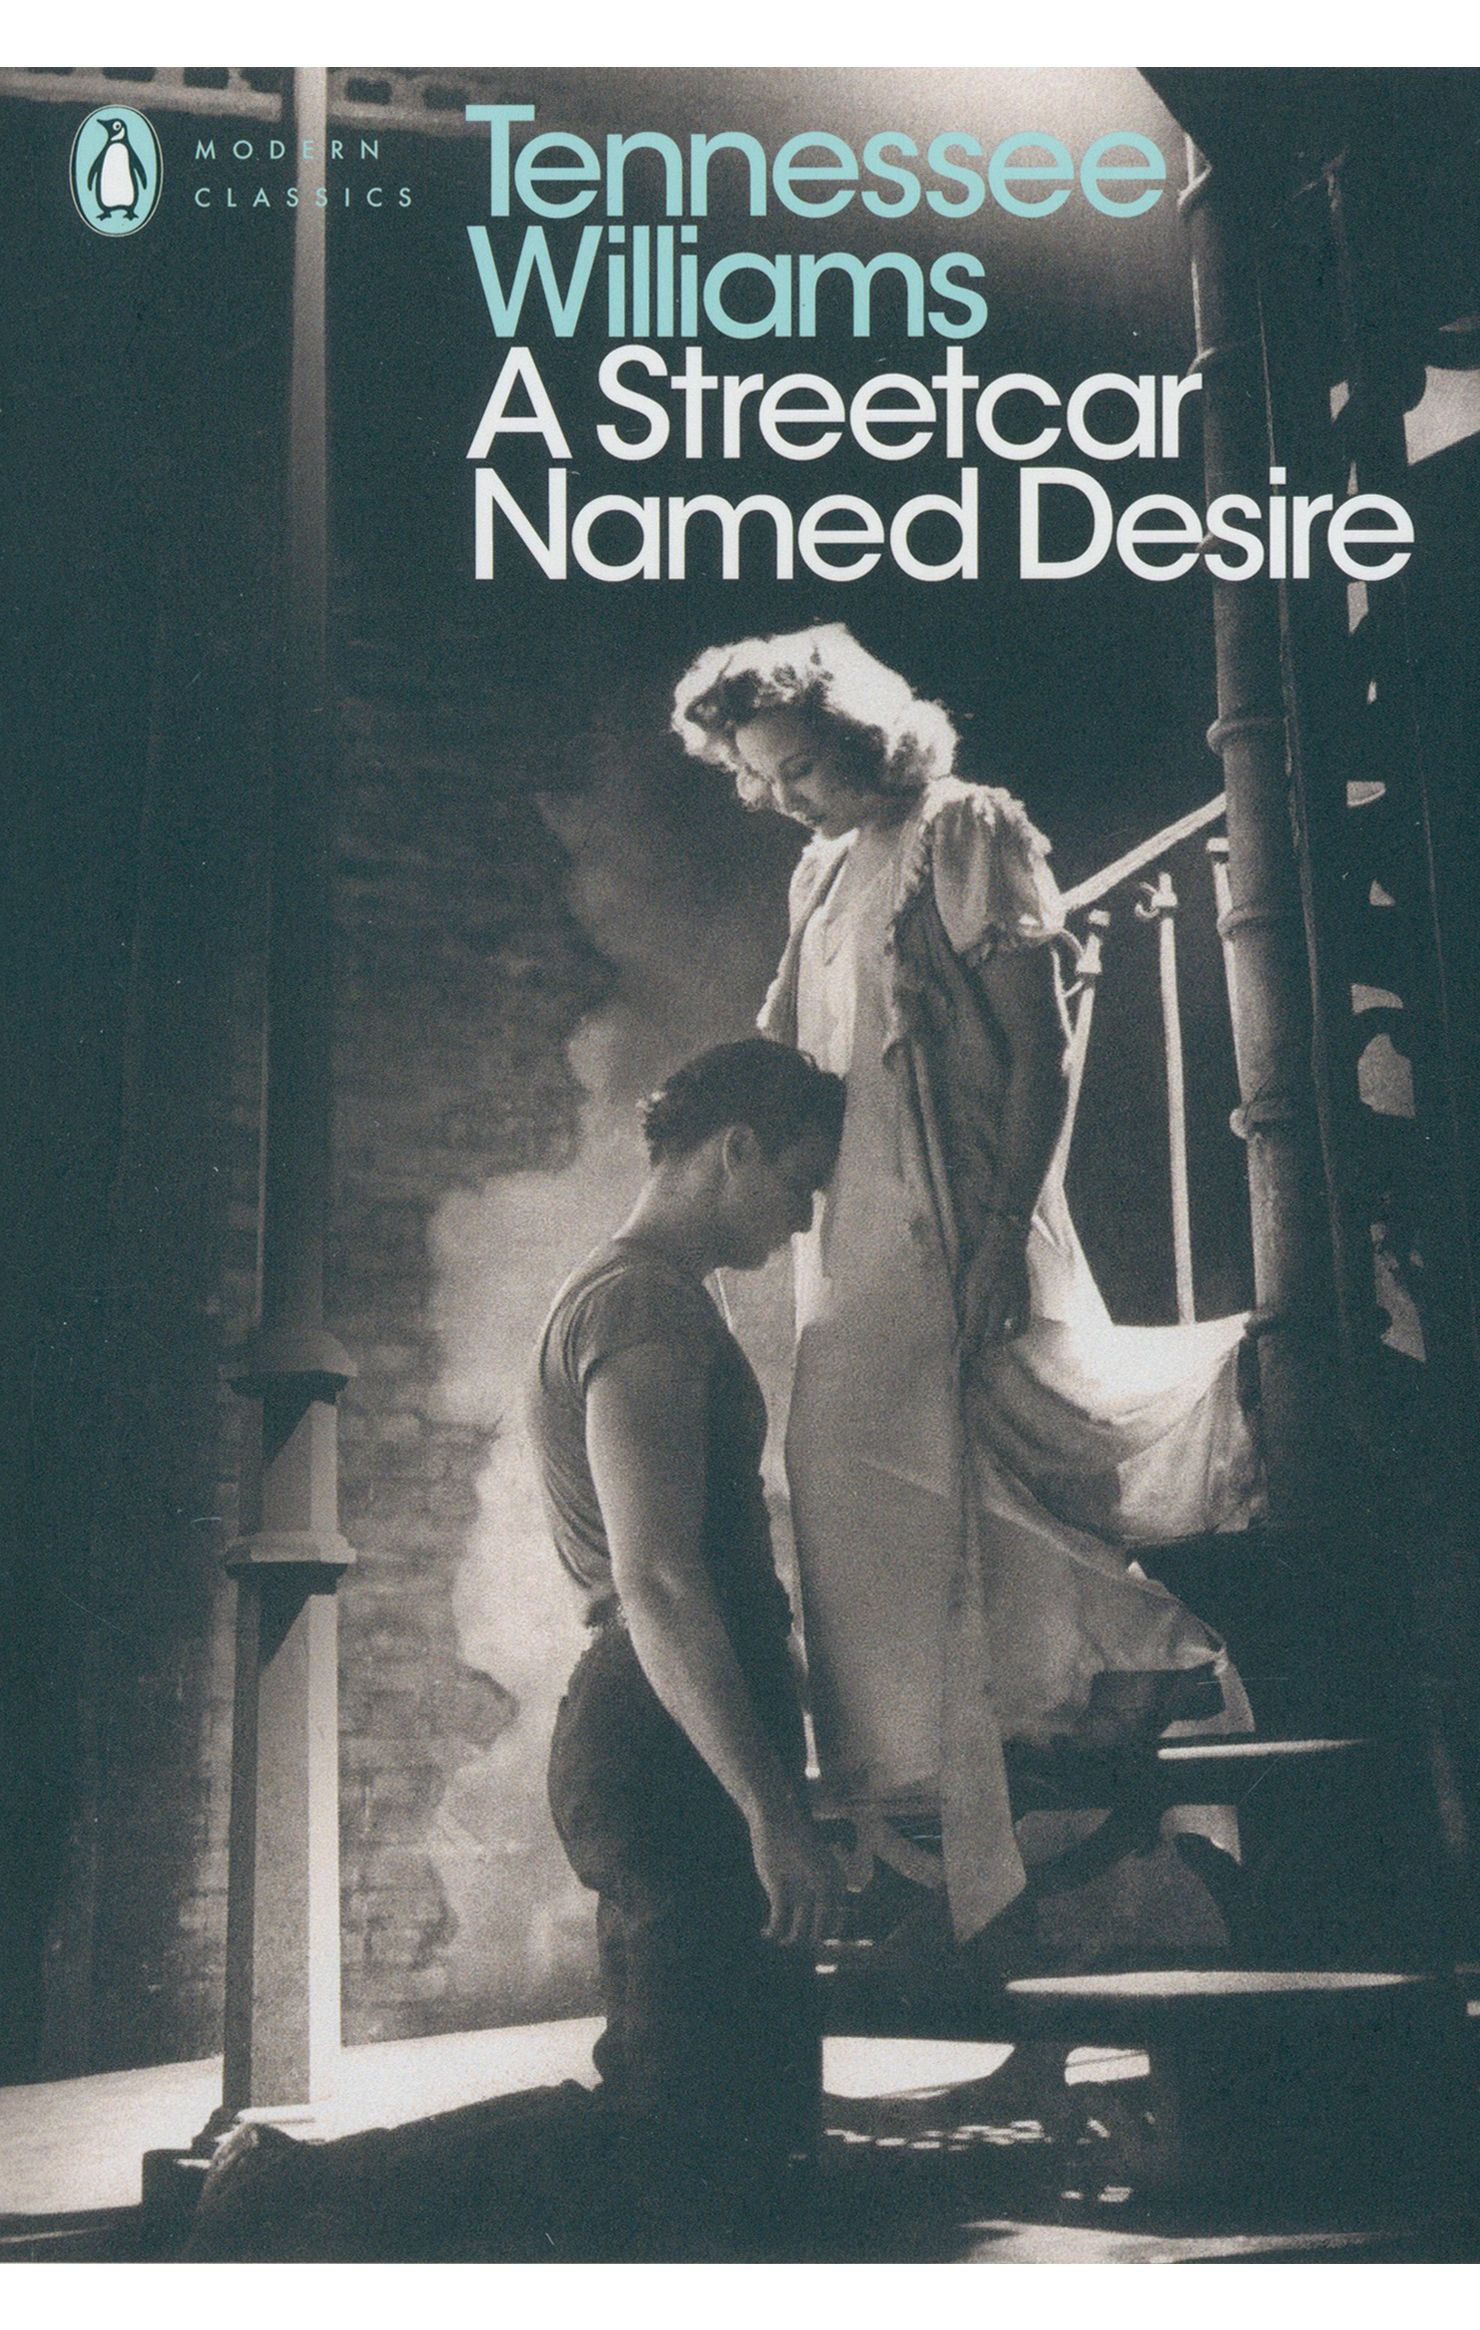 Named desire. Теннесси Уильямс трамвай желание. A Streetcar named Desire book. Трамвай желаний. Tennessee Williams Desire.